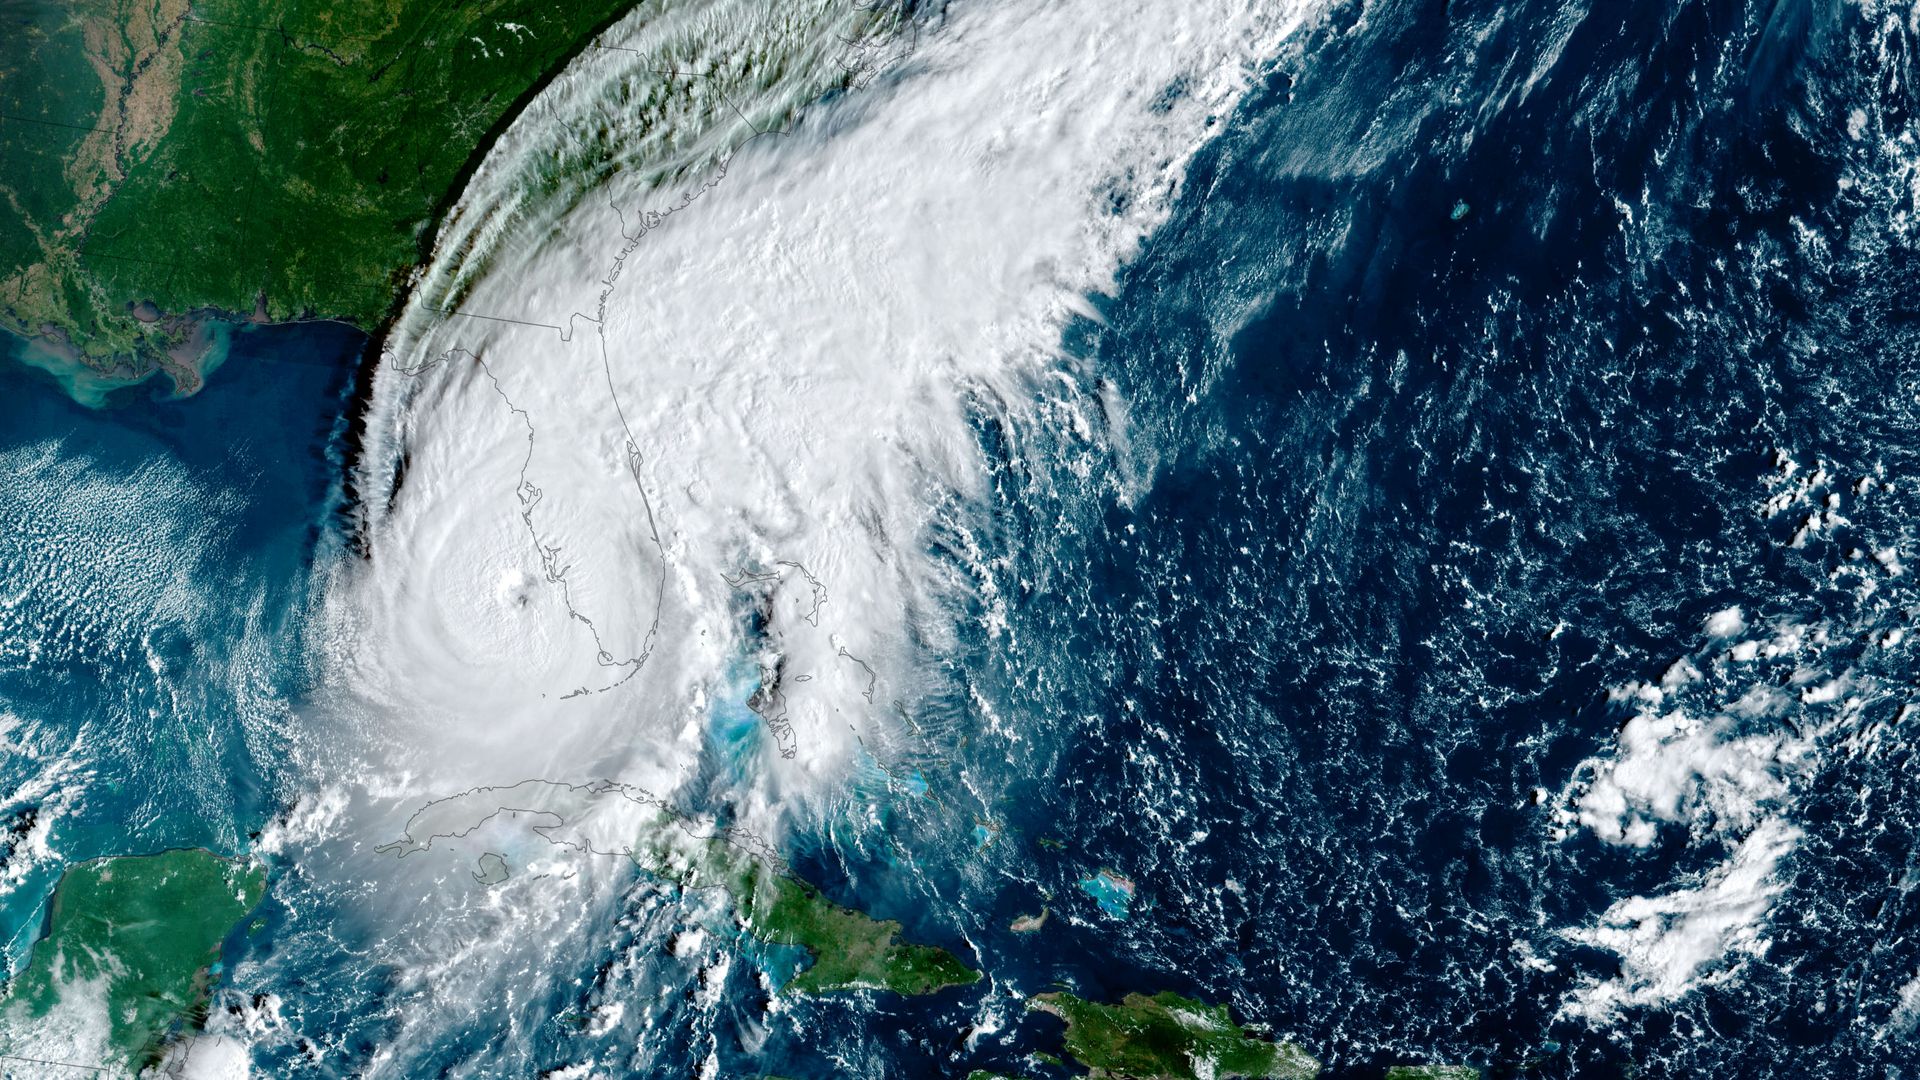 Satellite image of Hurricane Ian as it made landfall in southwestern Florida in 2022.